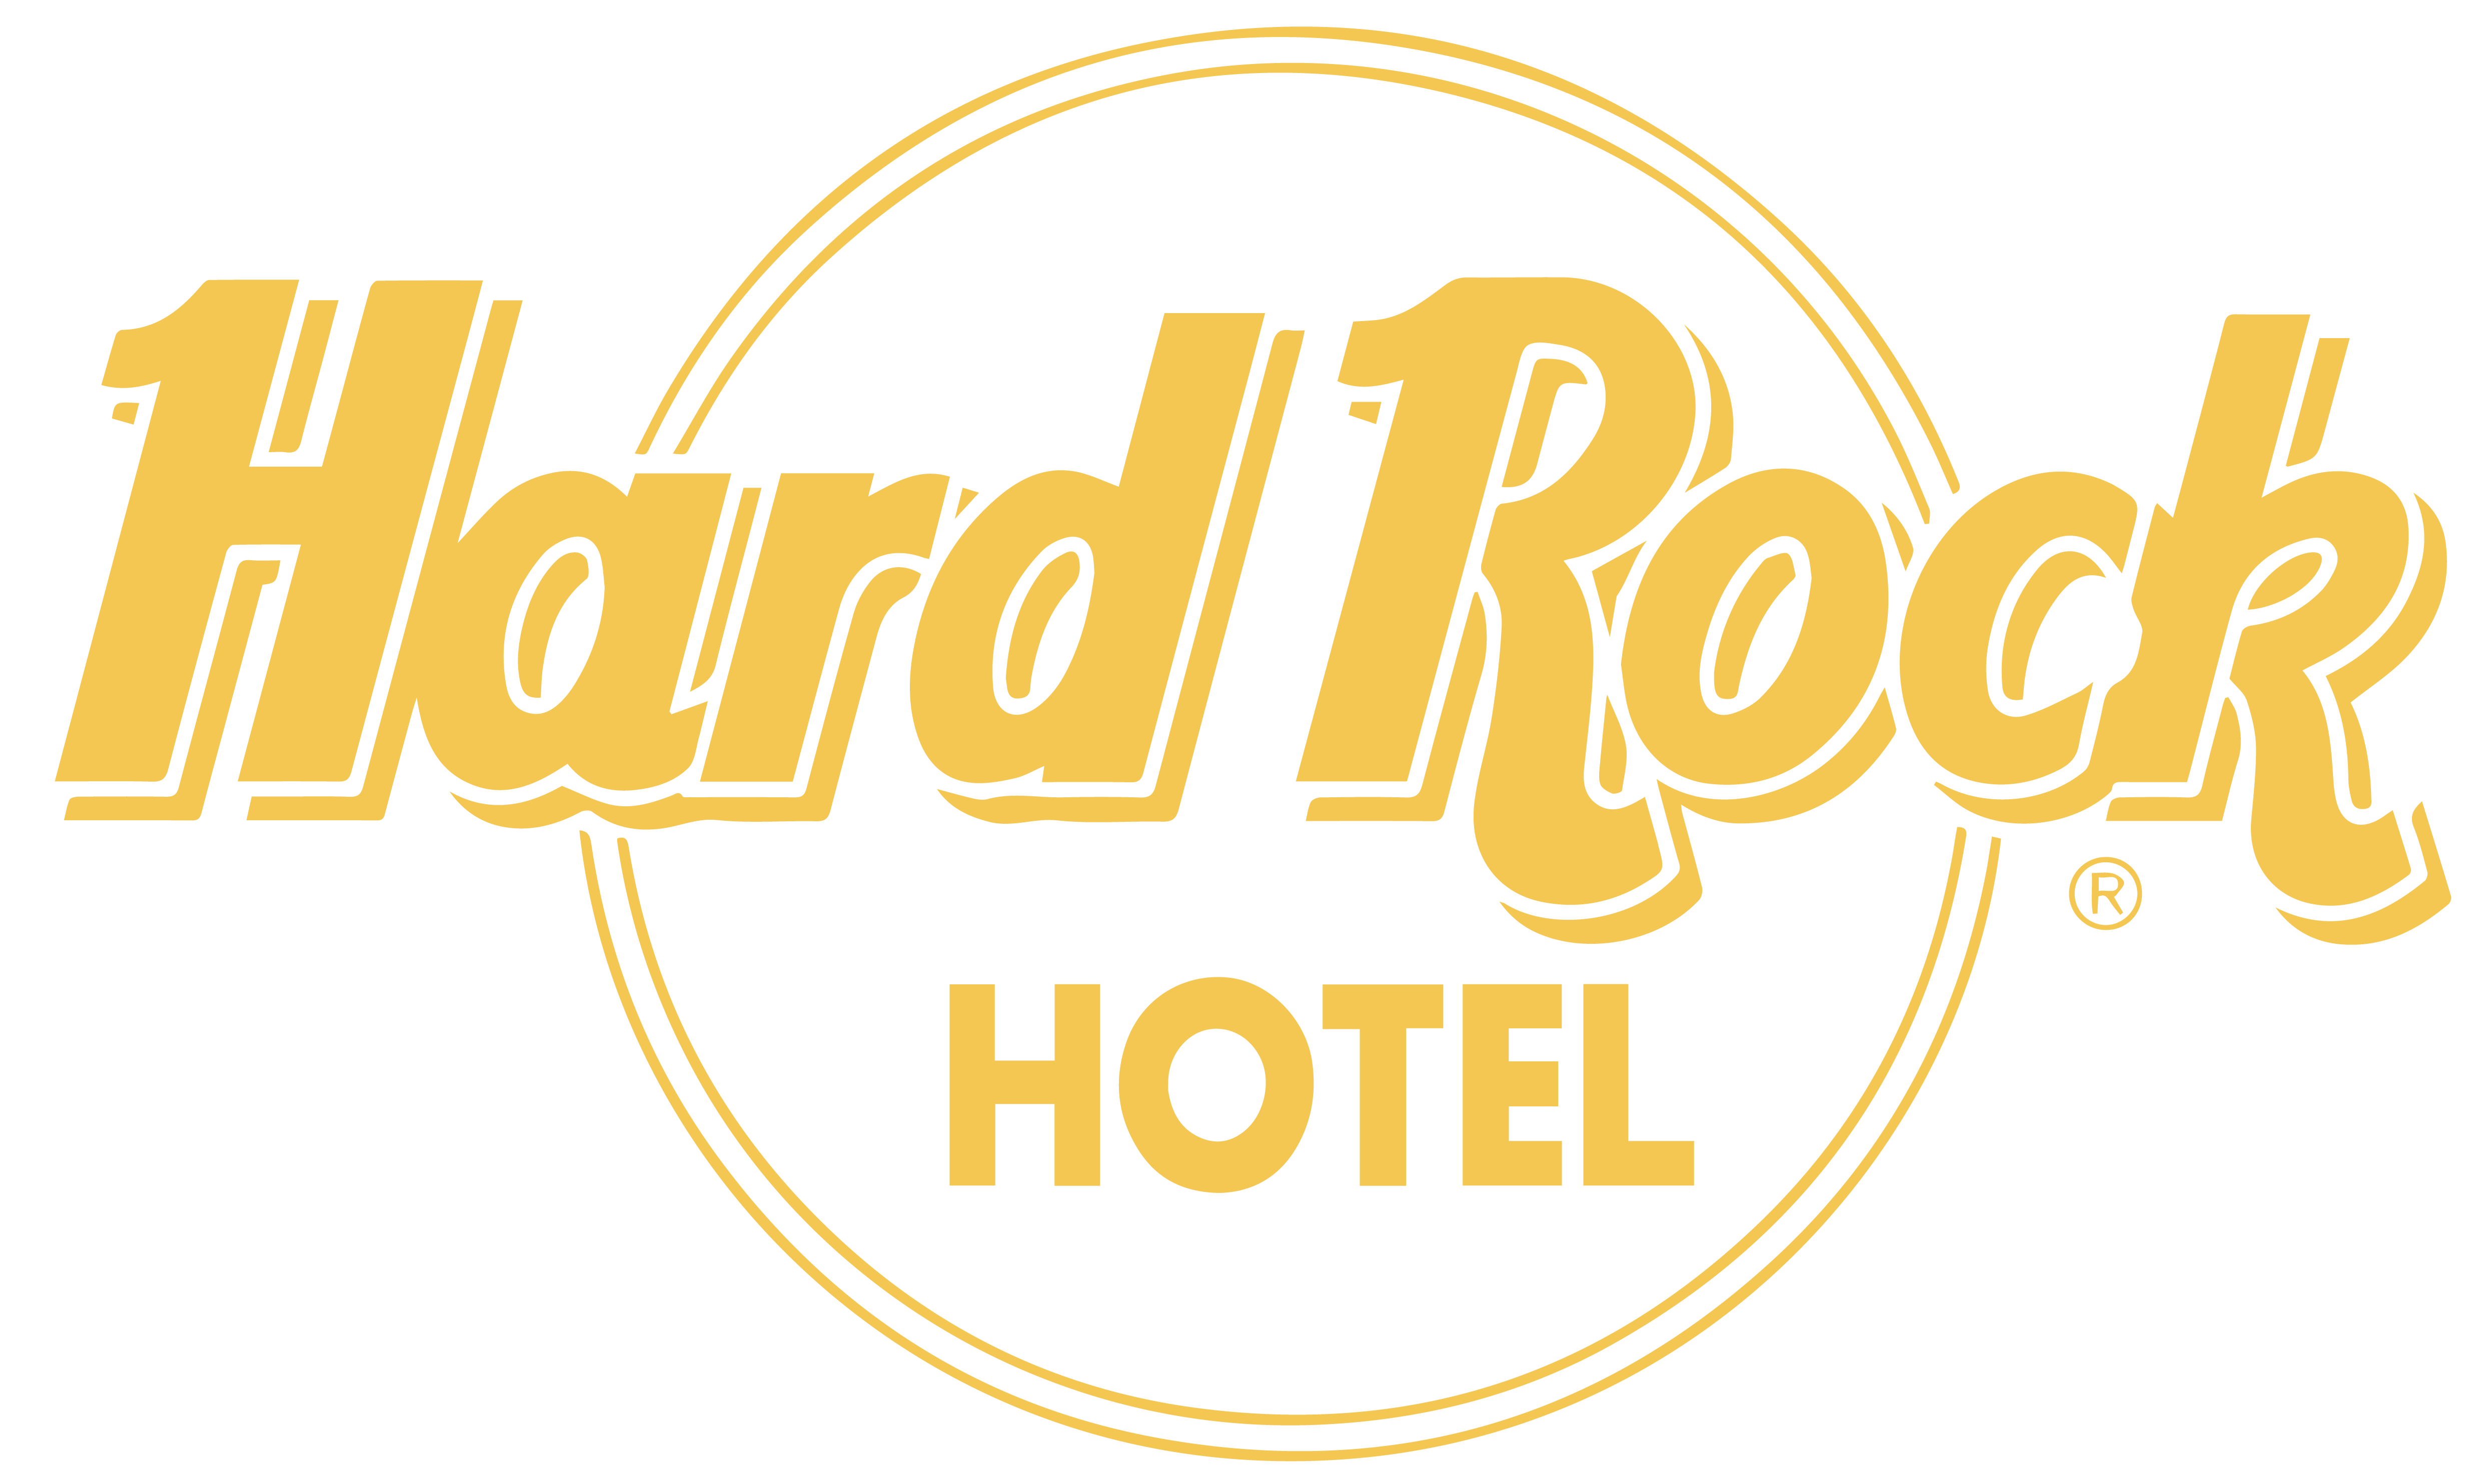 hard rock casino logo png